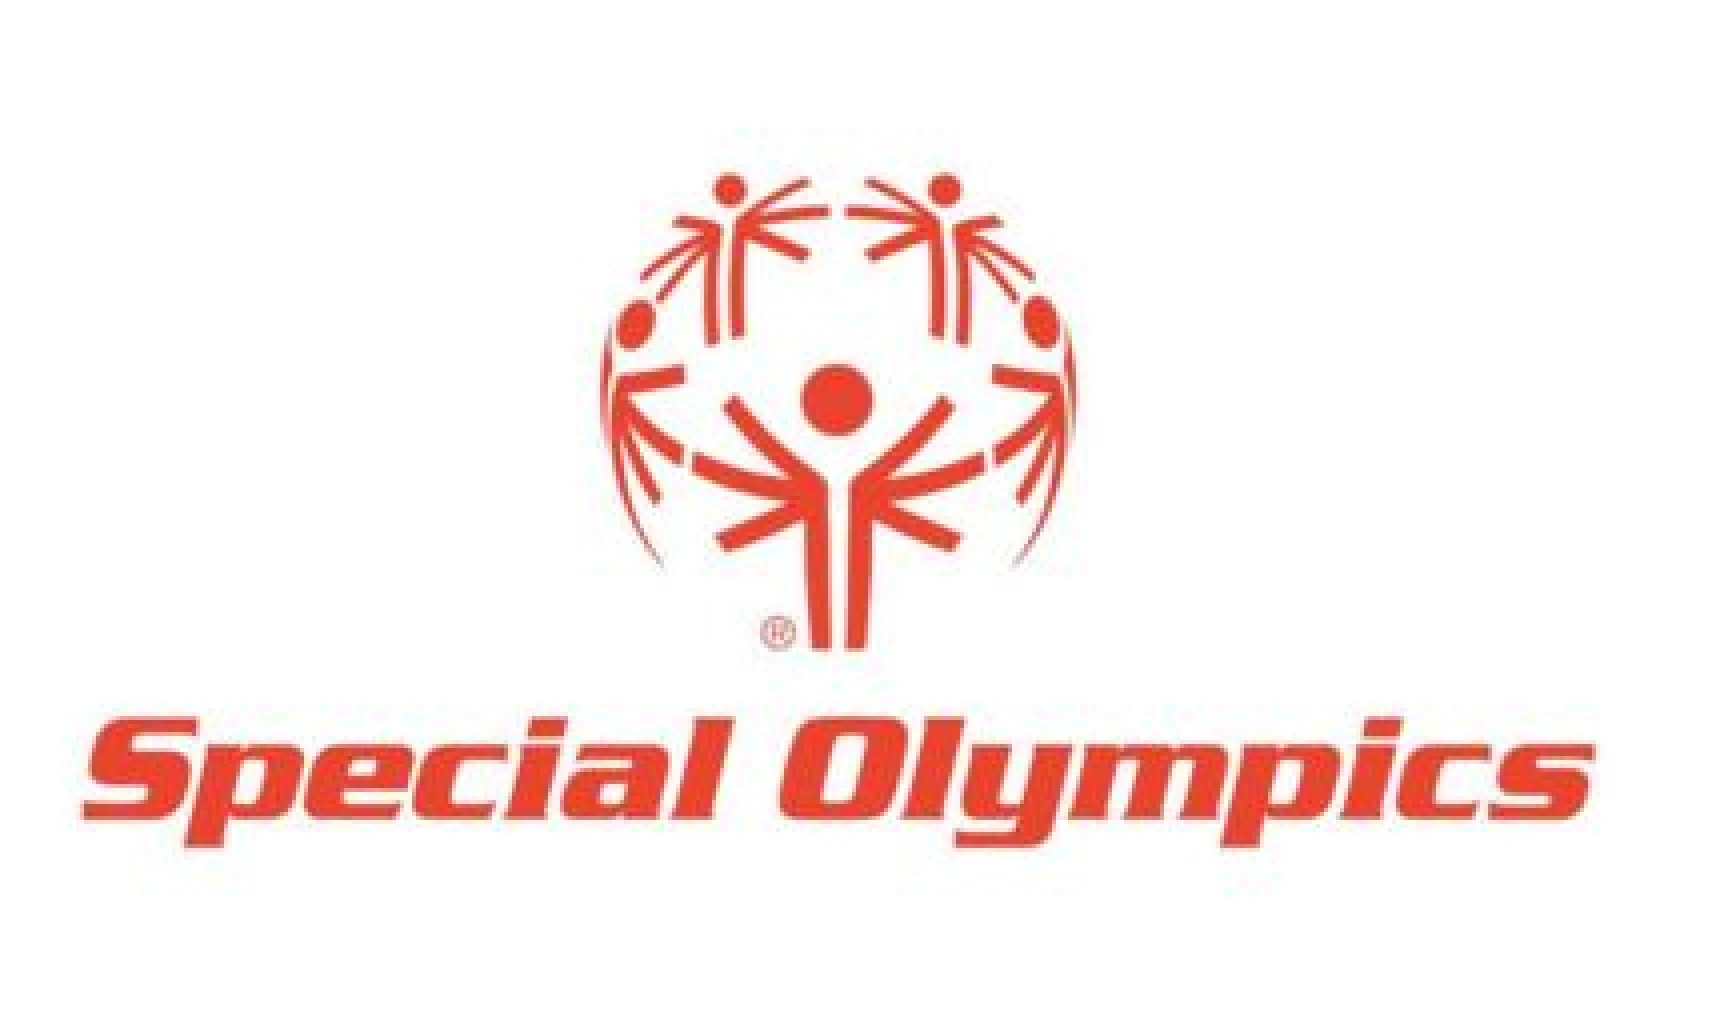 special_olympics